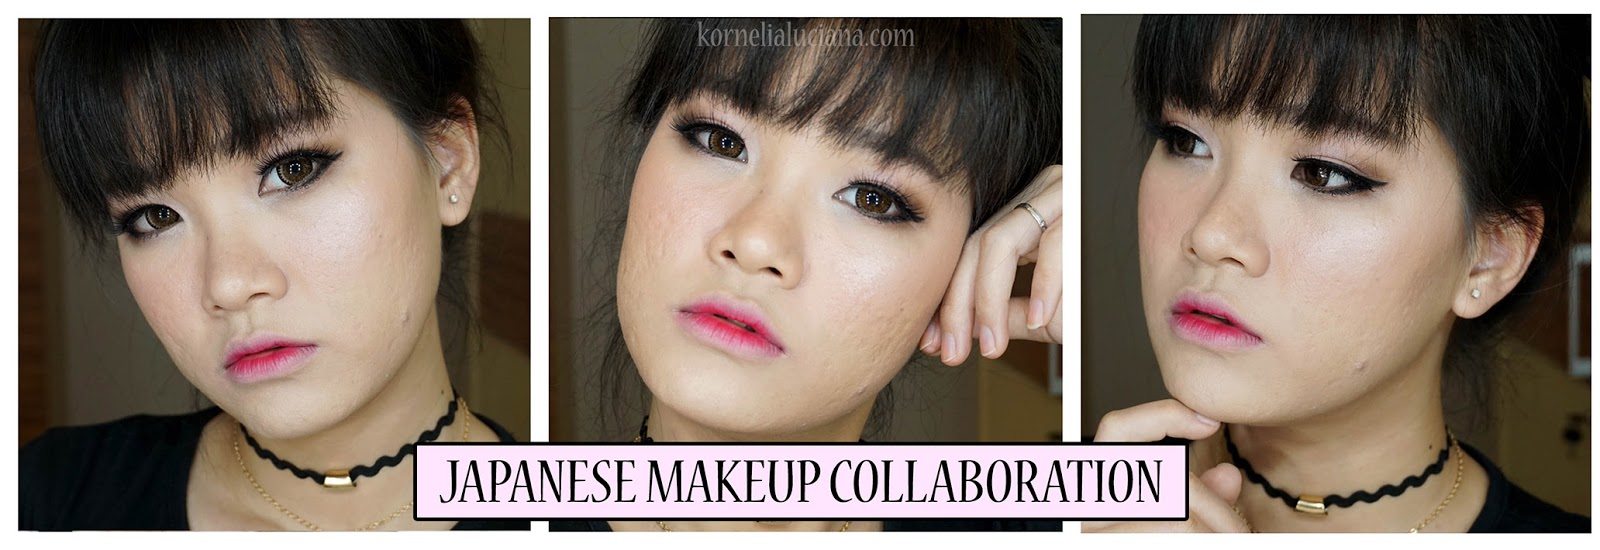 Japanese Makeup Collaboration Beautiesquad Kornelia Luciana